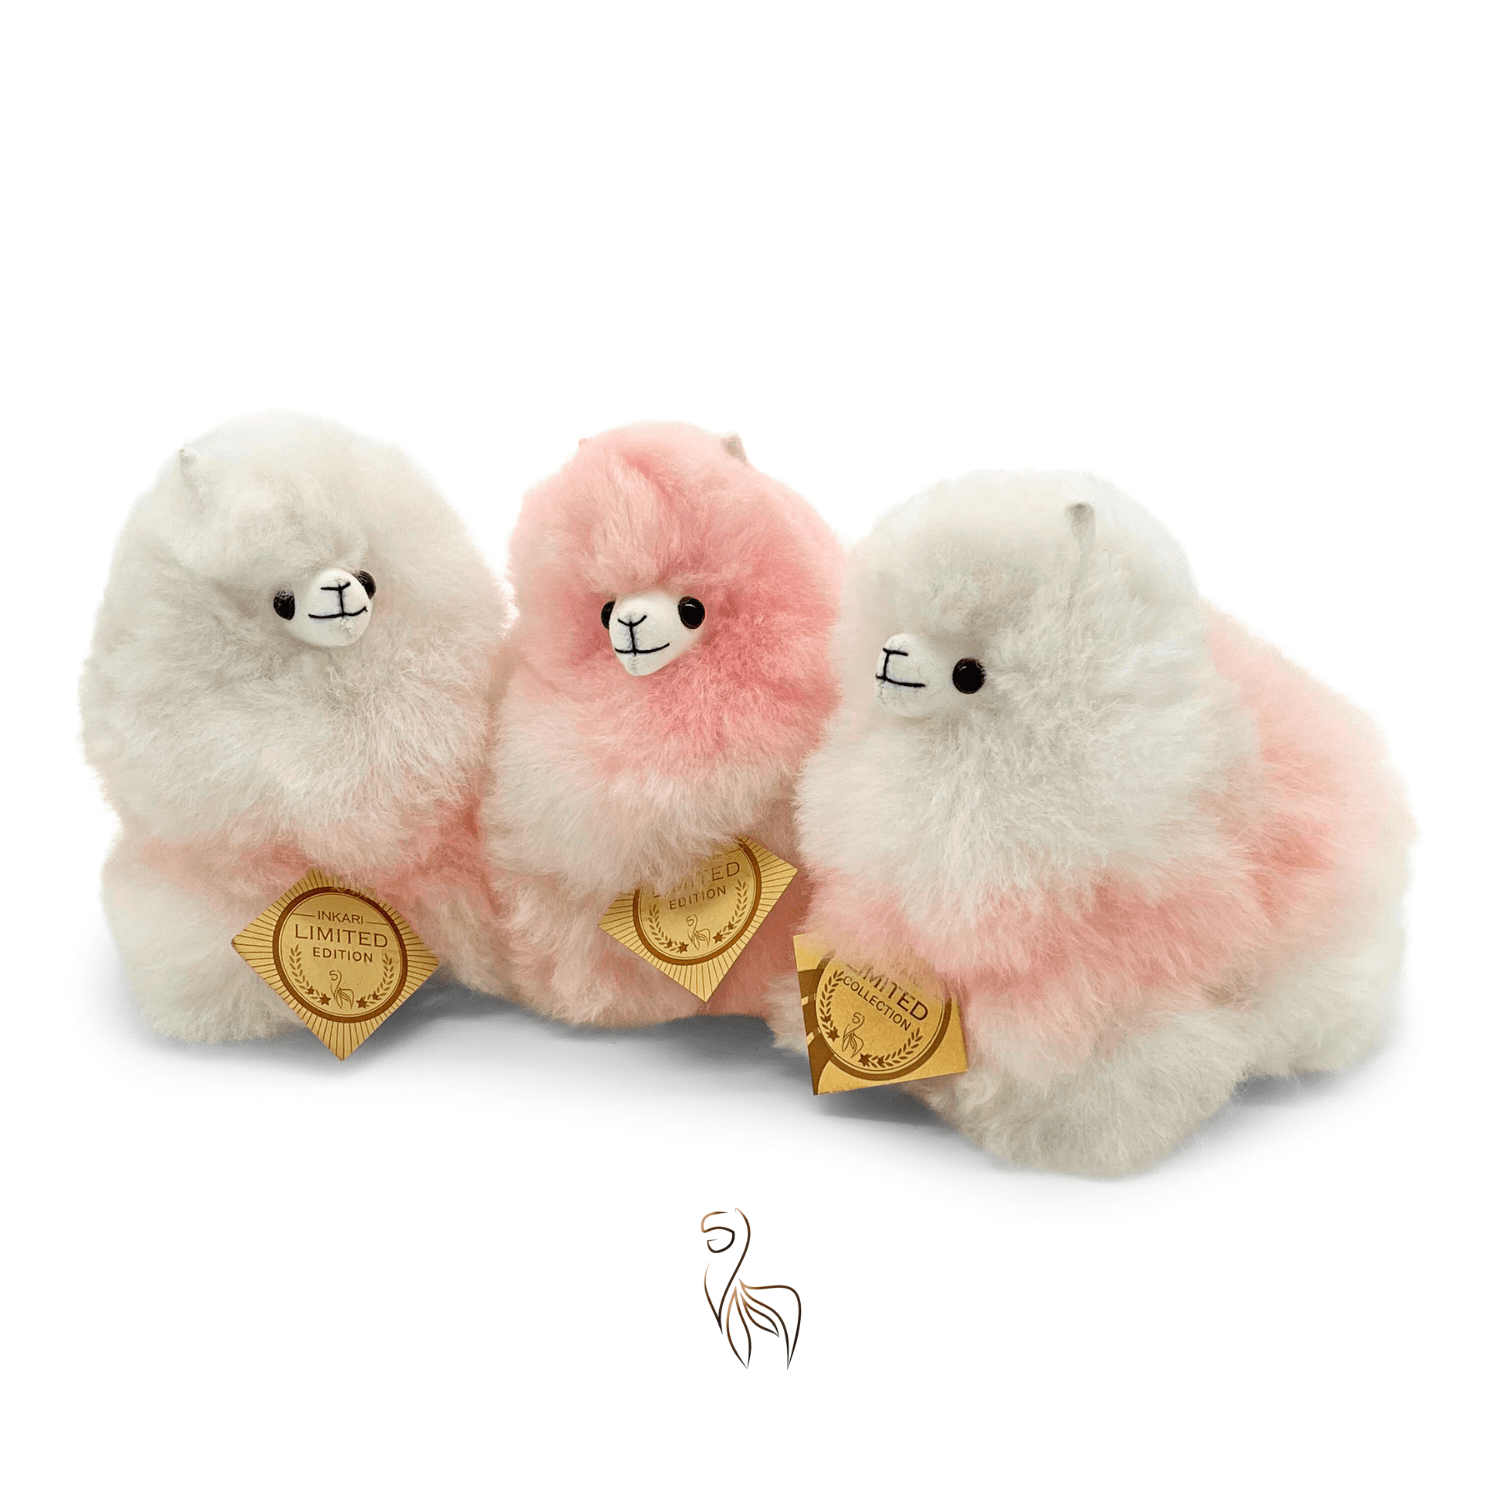 Cotton Candy Cloud - Mini Alpaca Toy (15cm) - Limited Edition